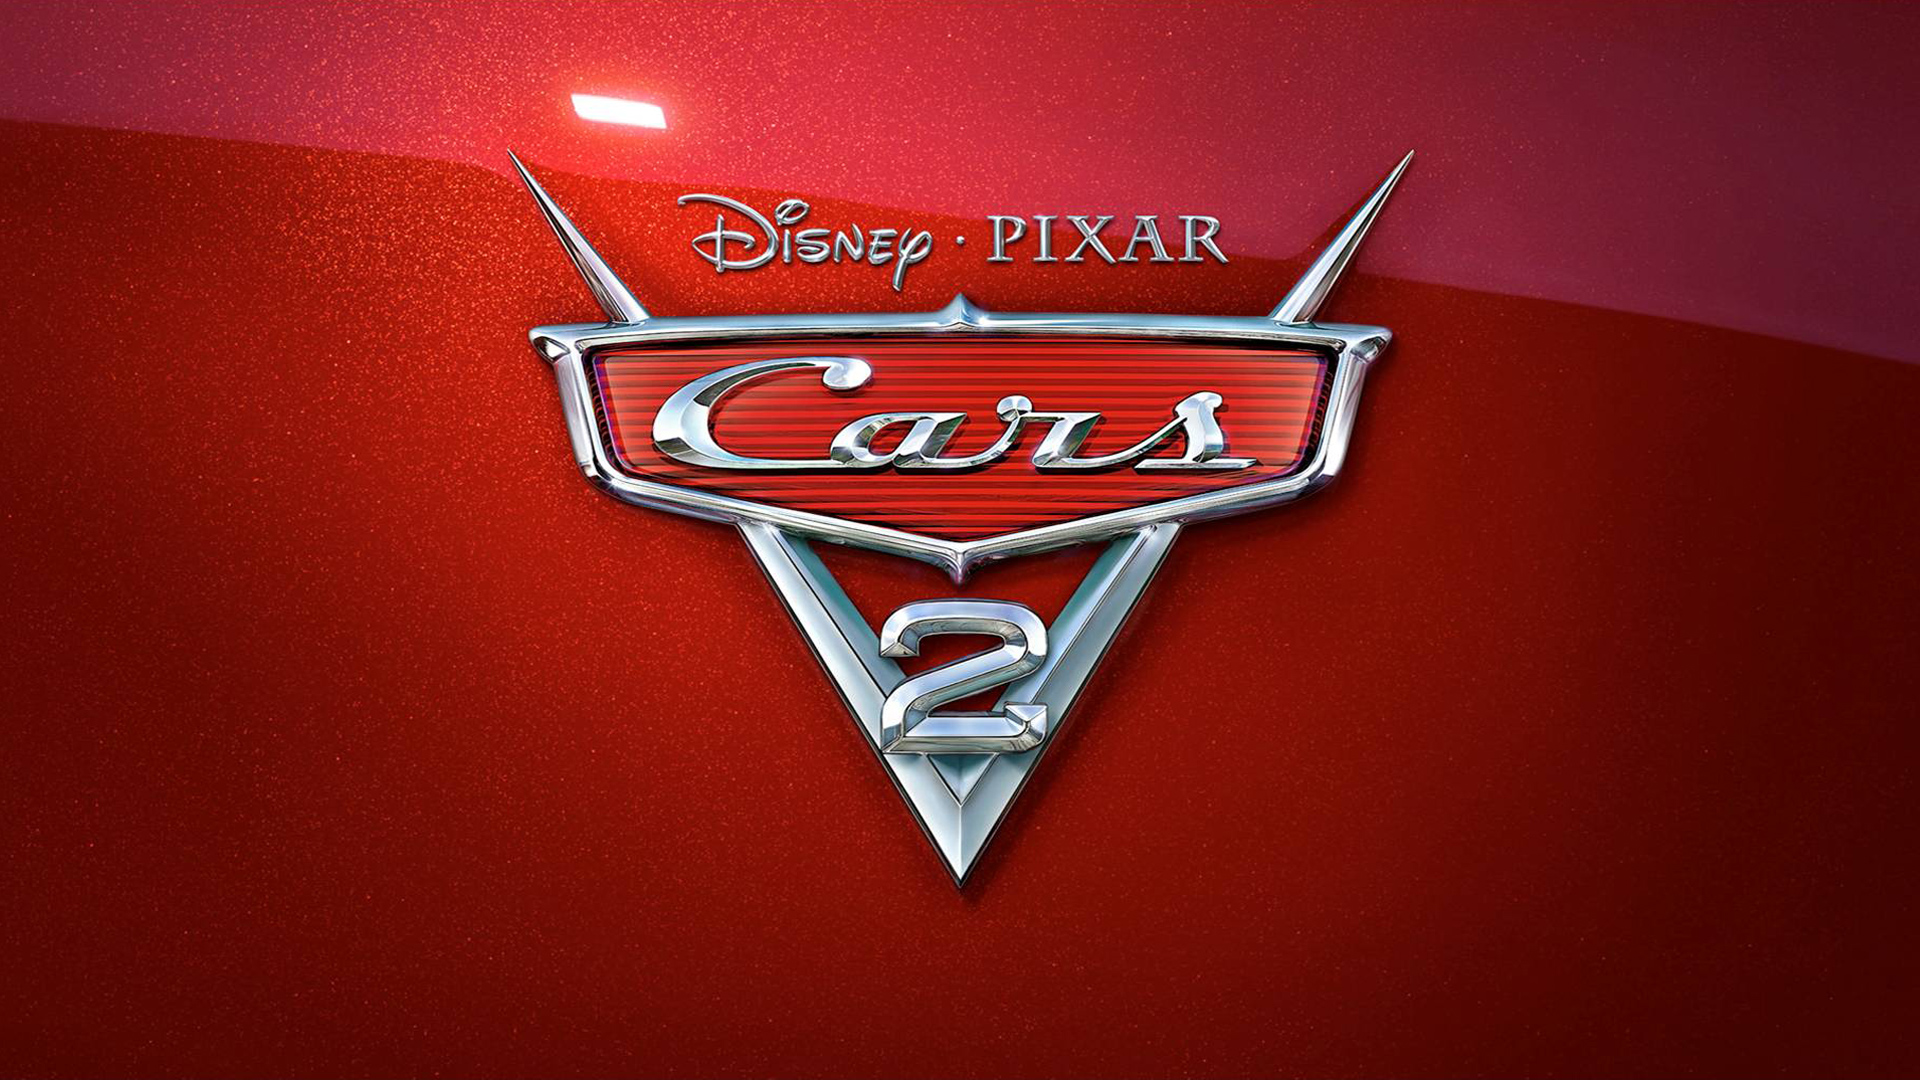 Disney Cars Logo Wallpaper 1920x1080 27655